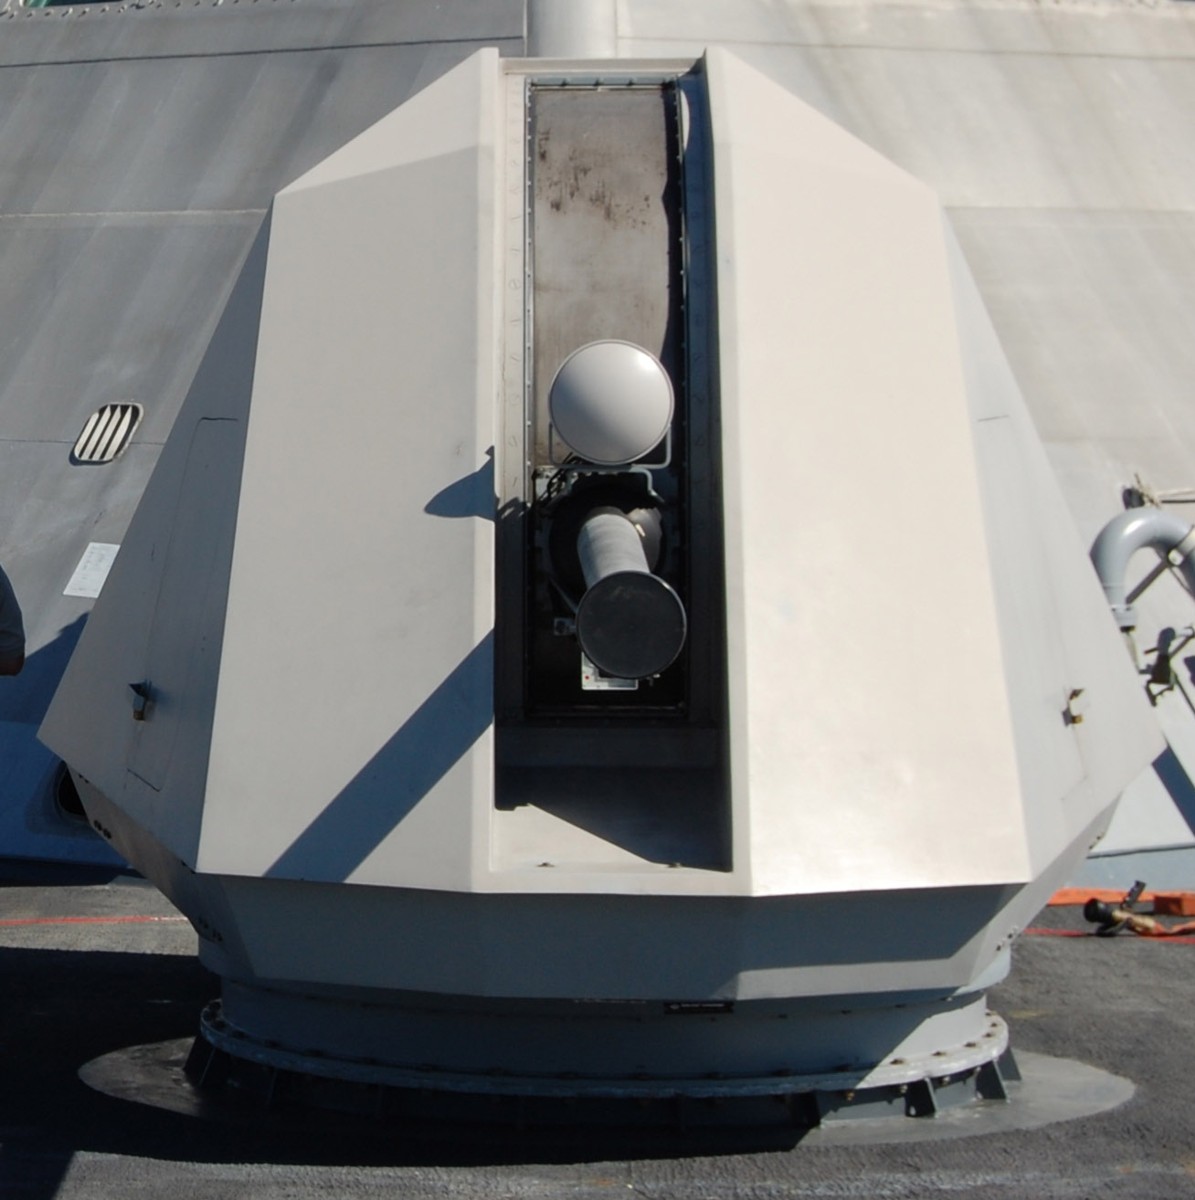 mk.110 mod.0 57mm naval gun bofors 57/L70 bae systems freedom class littoral combat ship lcs us navy 09